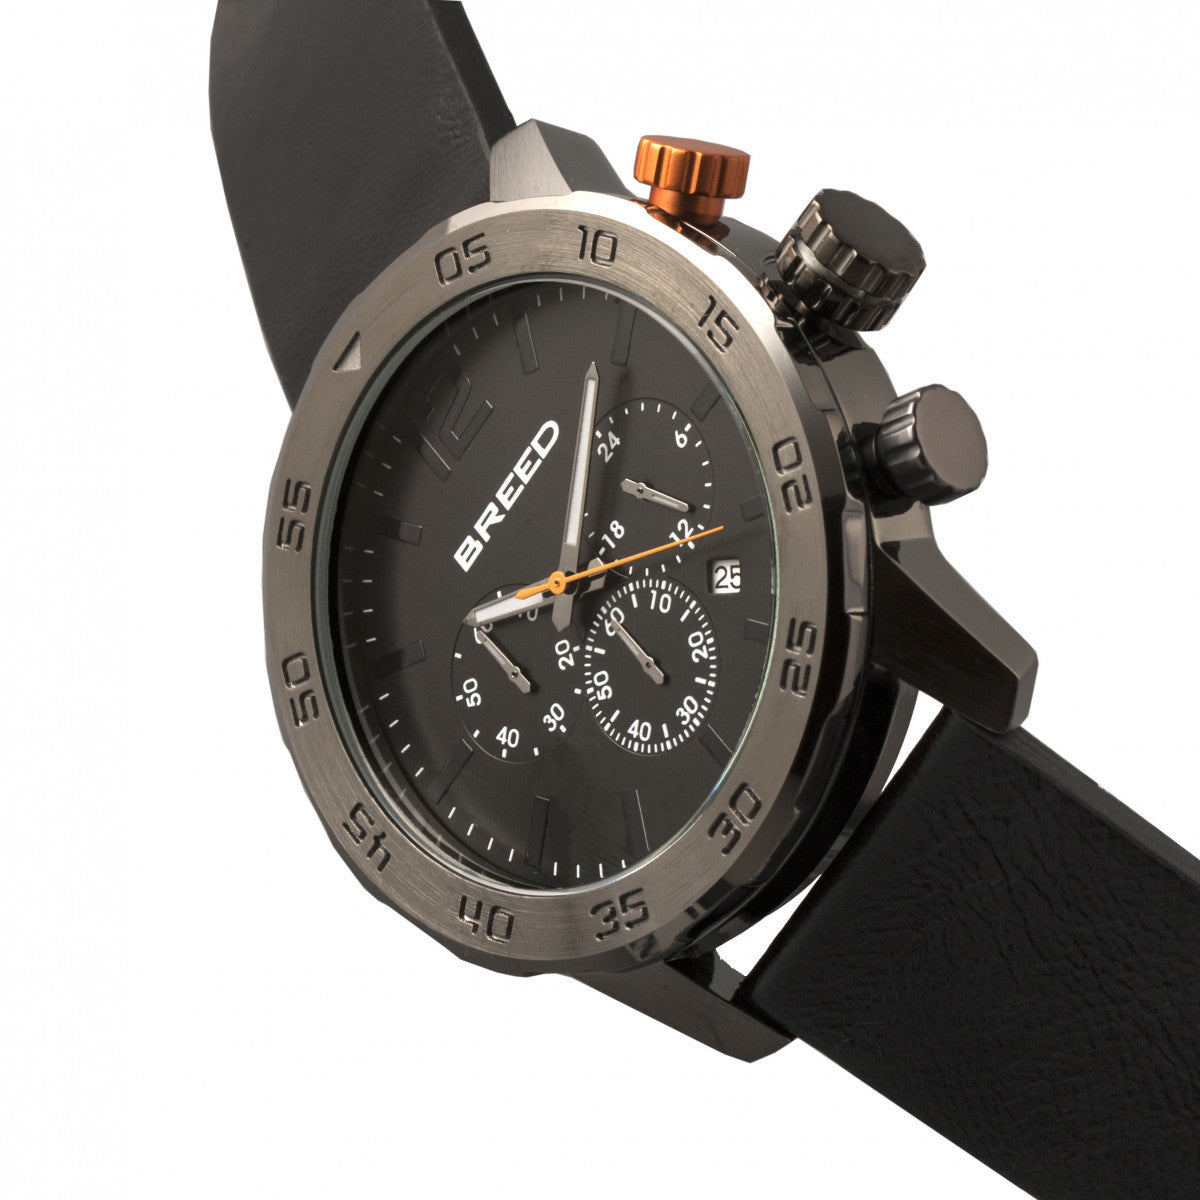 Breed Manuel Chronograph Leather-Band Watch w/Date - Gunmetal/Black - BRD7206